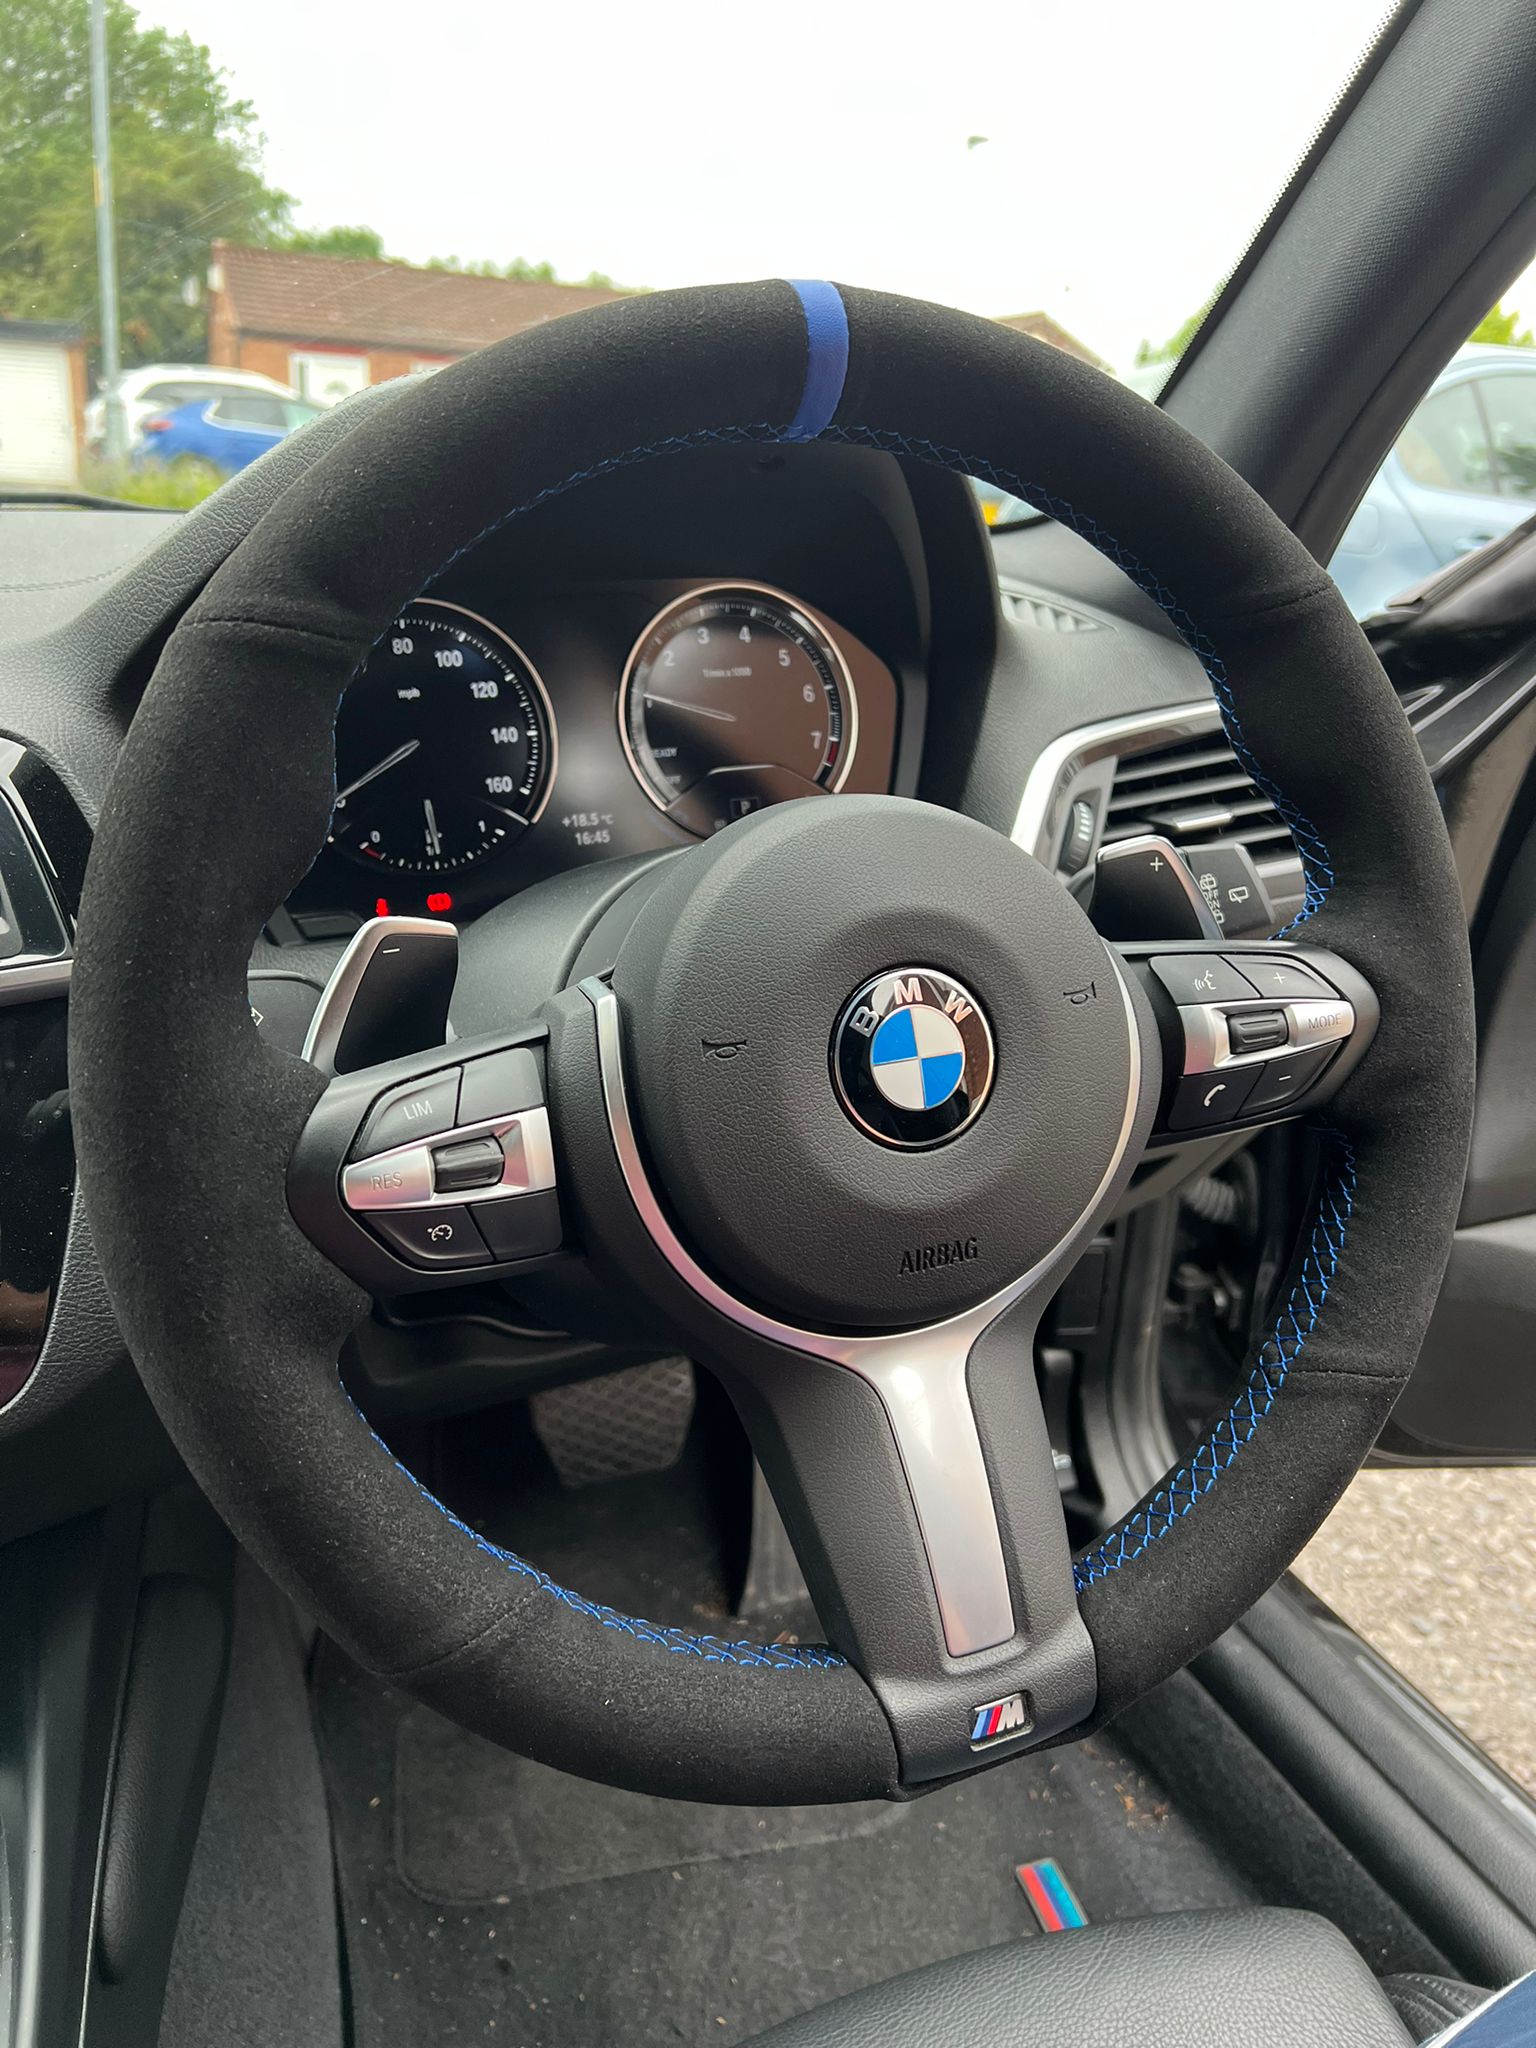 BMW Steering Wheel Cover